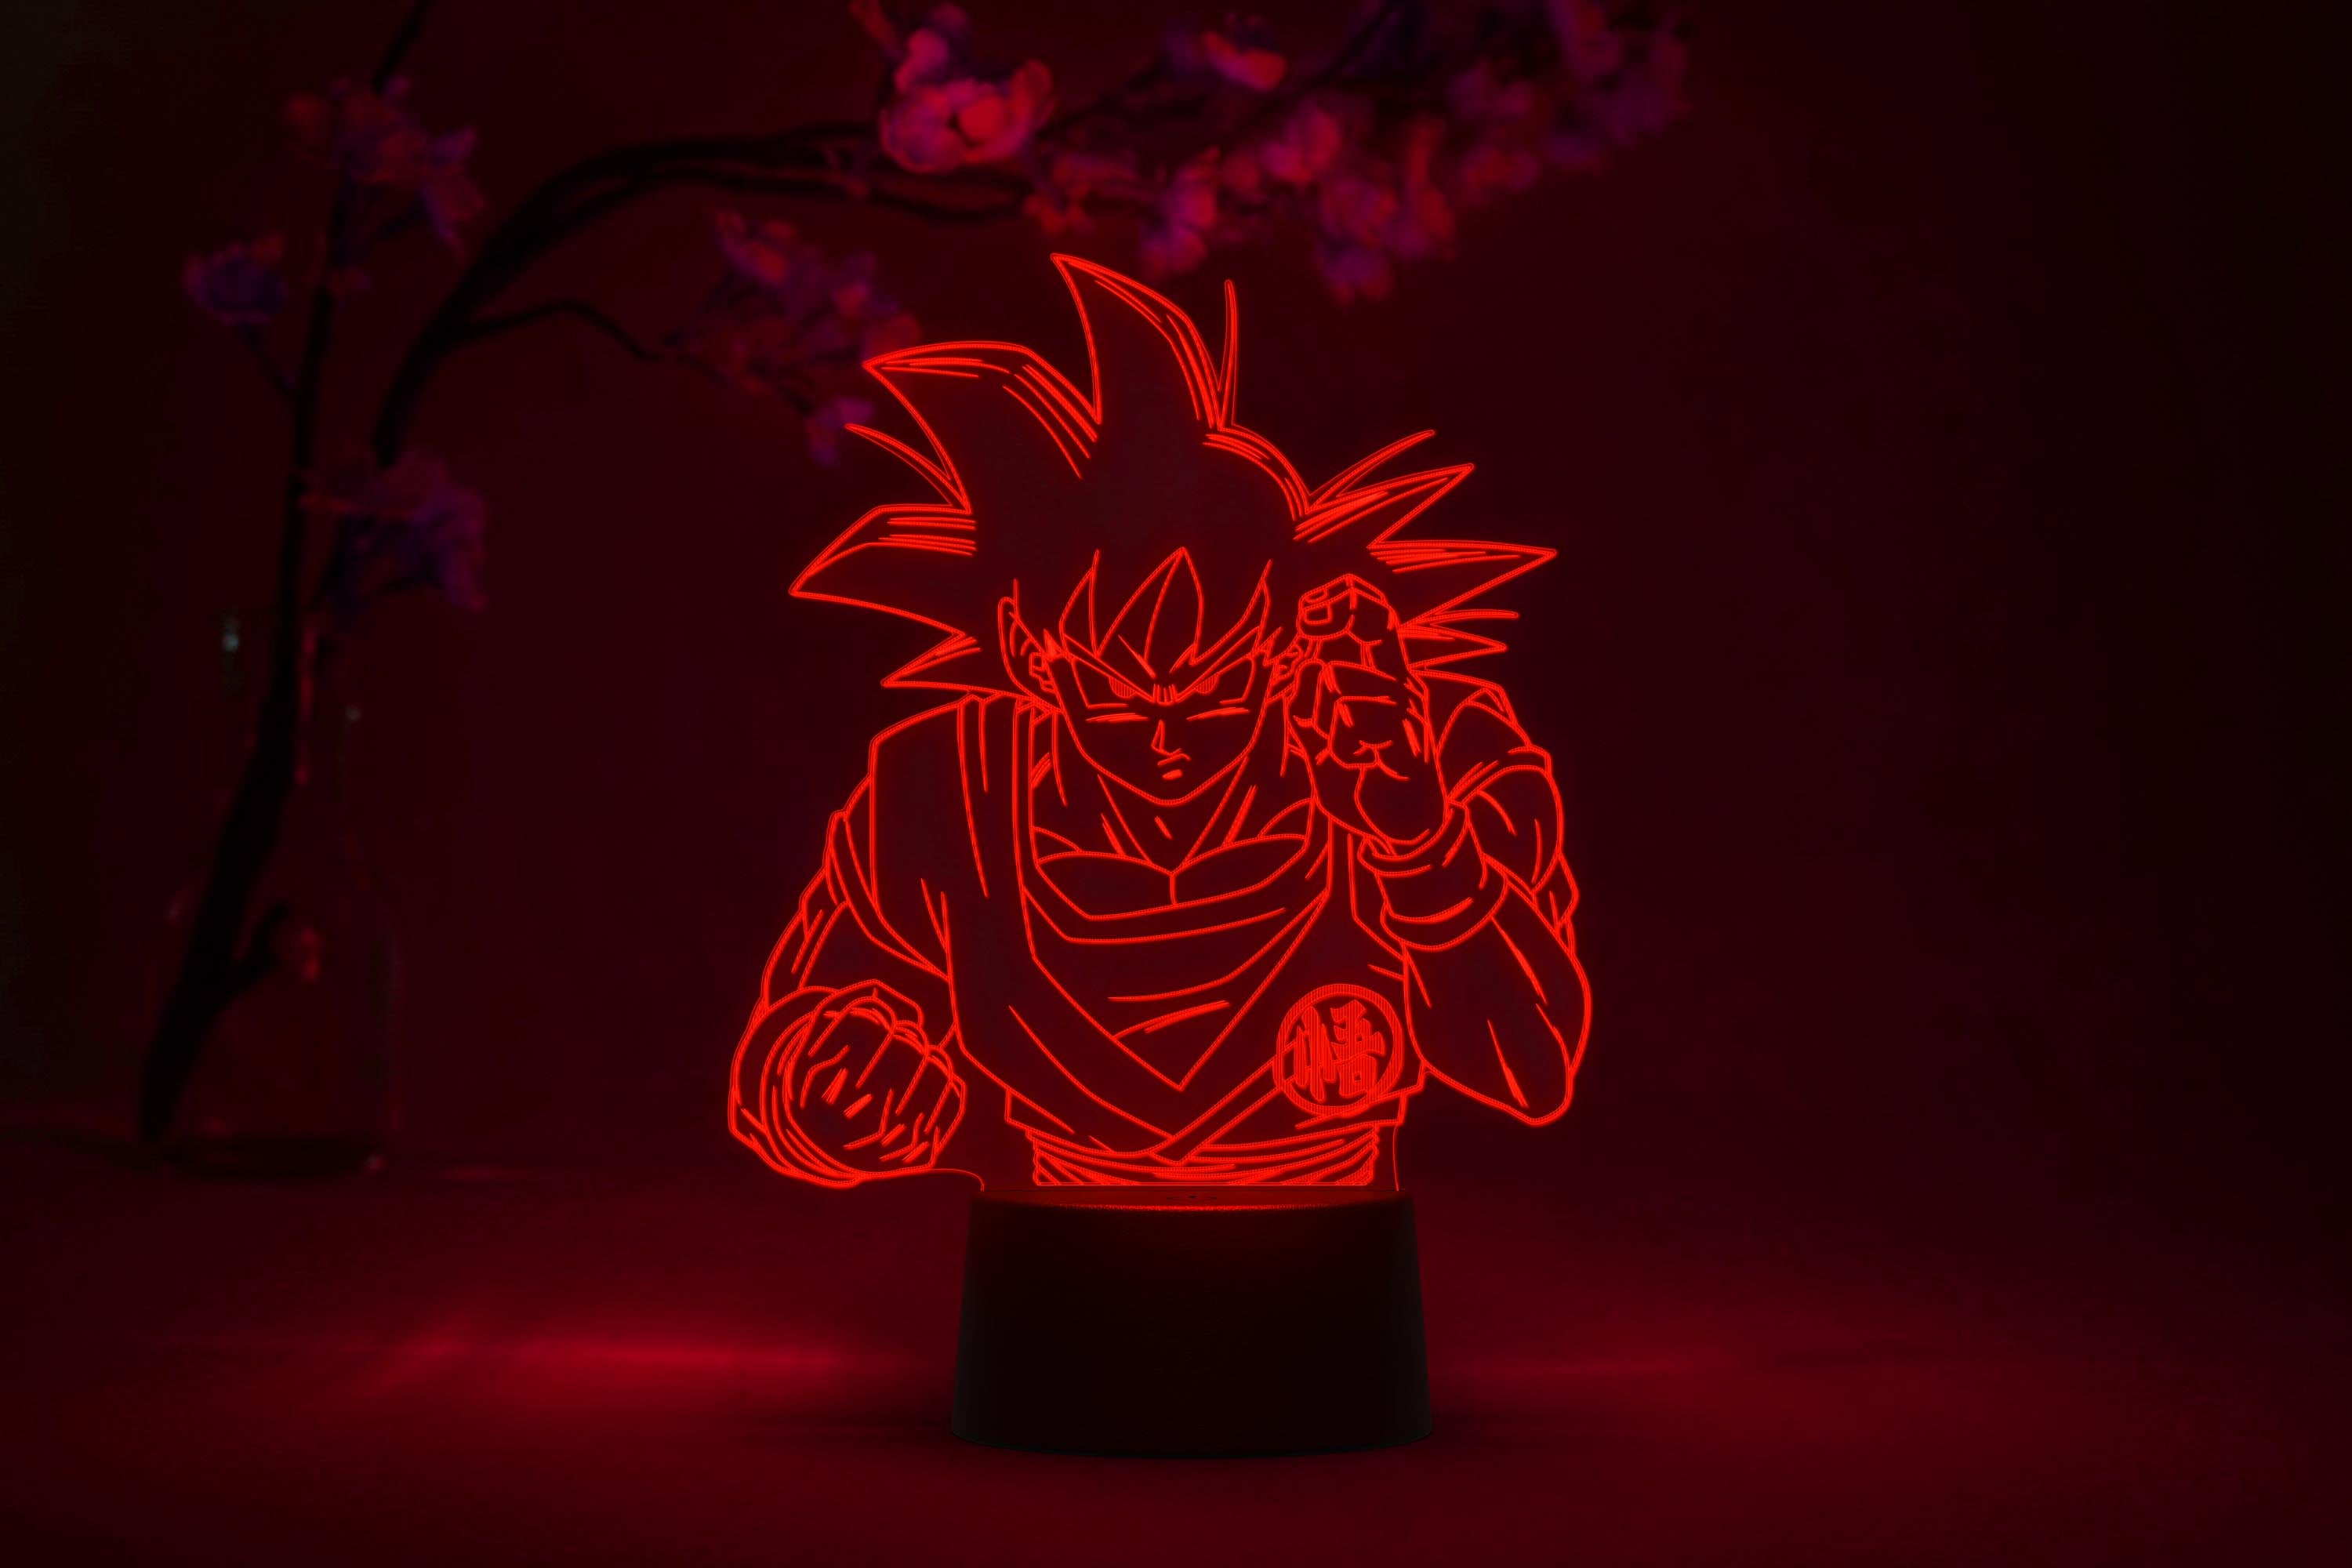 Goku Fight Otaku Lamp (Dragon Ball Super)